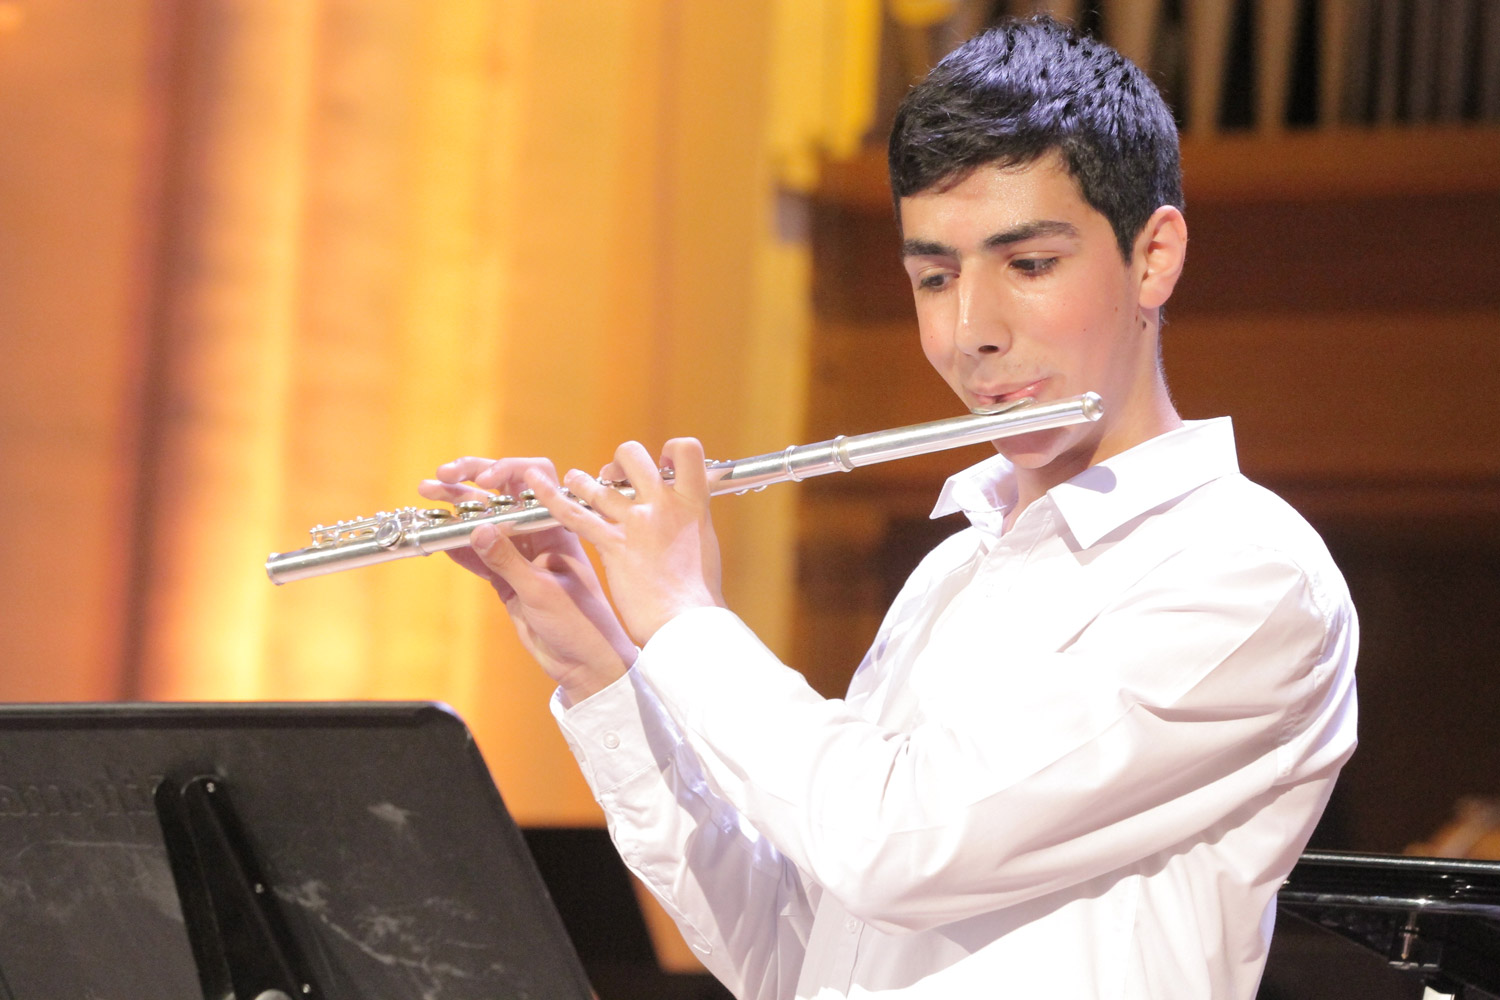 4. Khazhak Tumasyan, flute